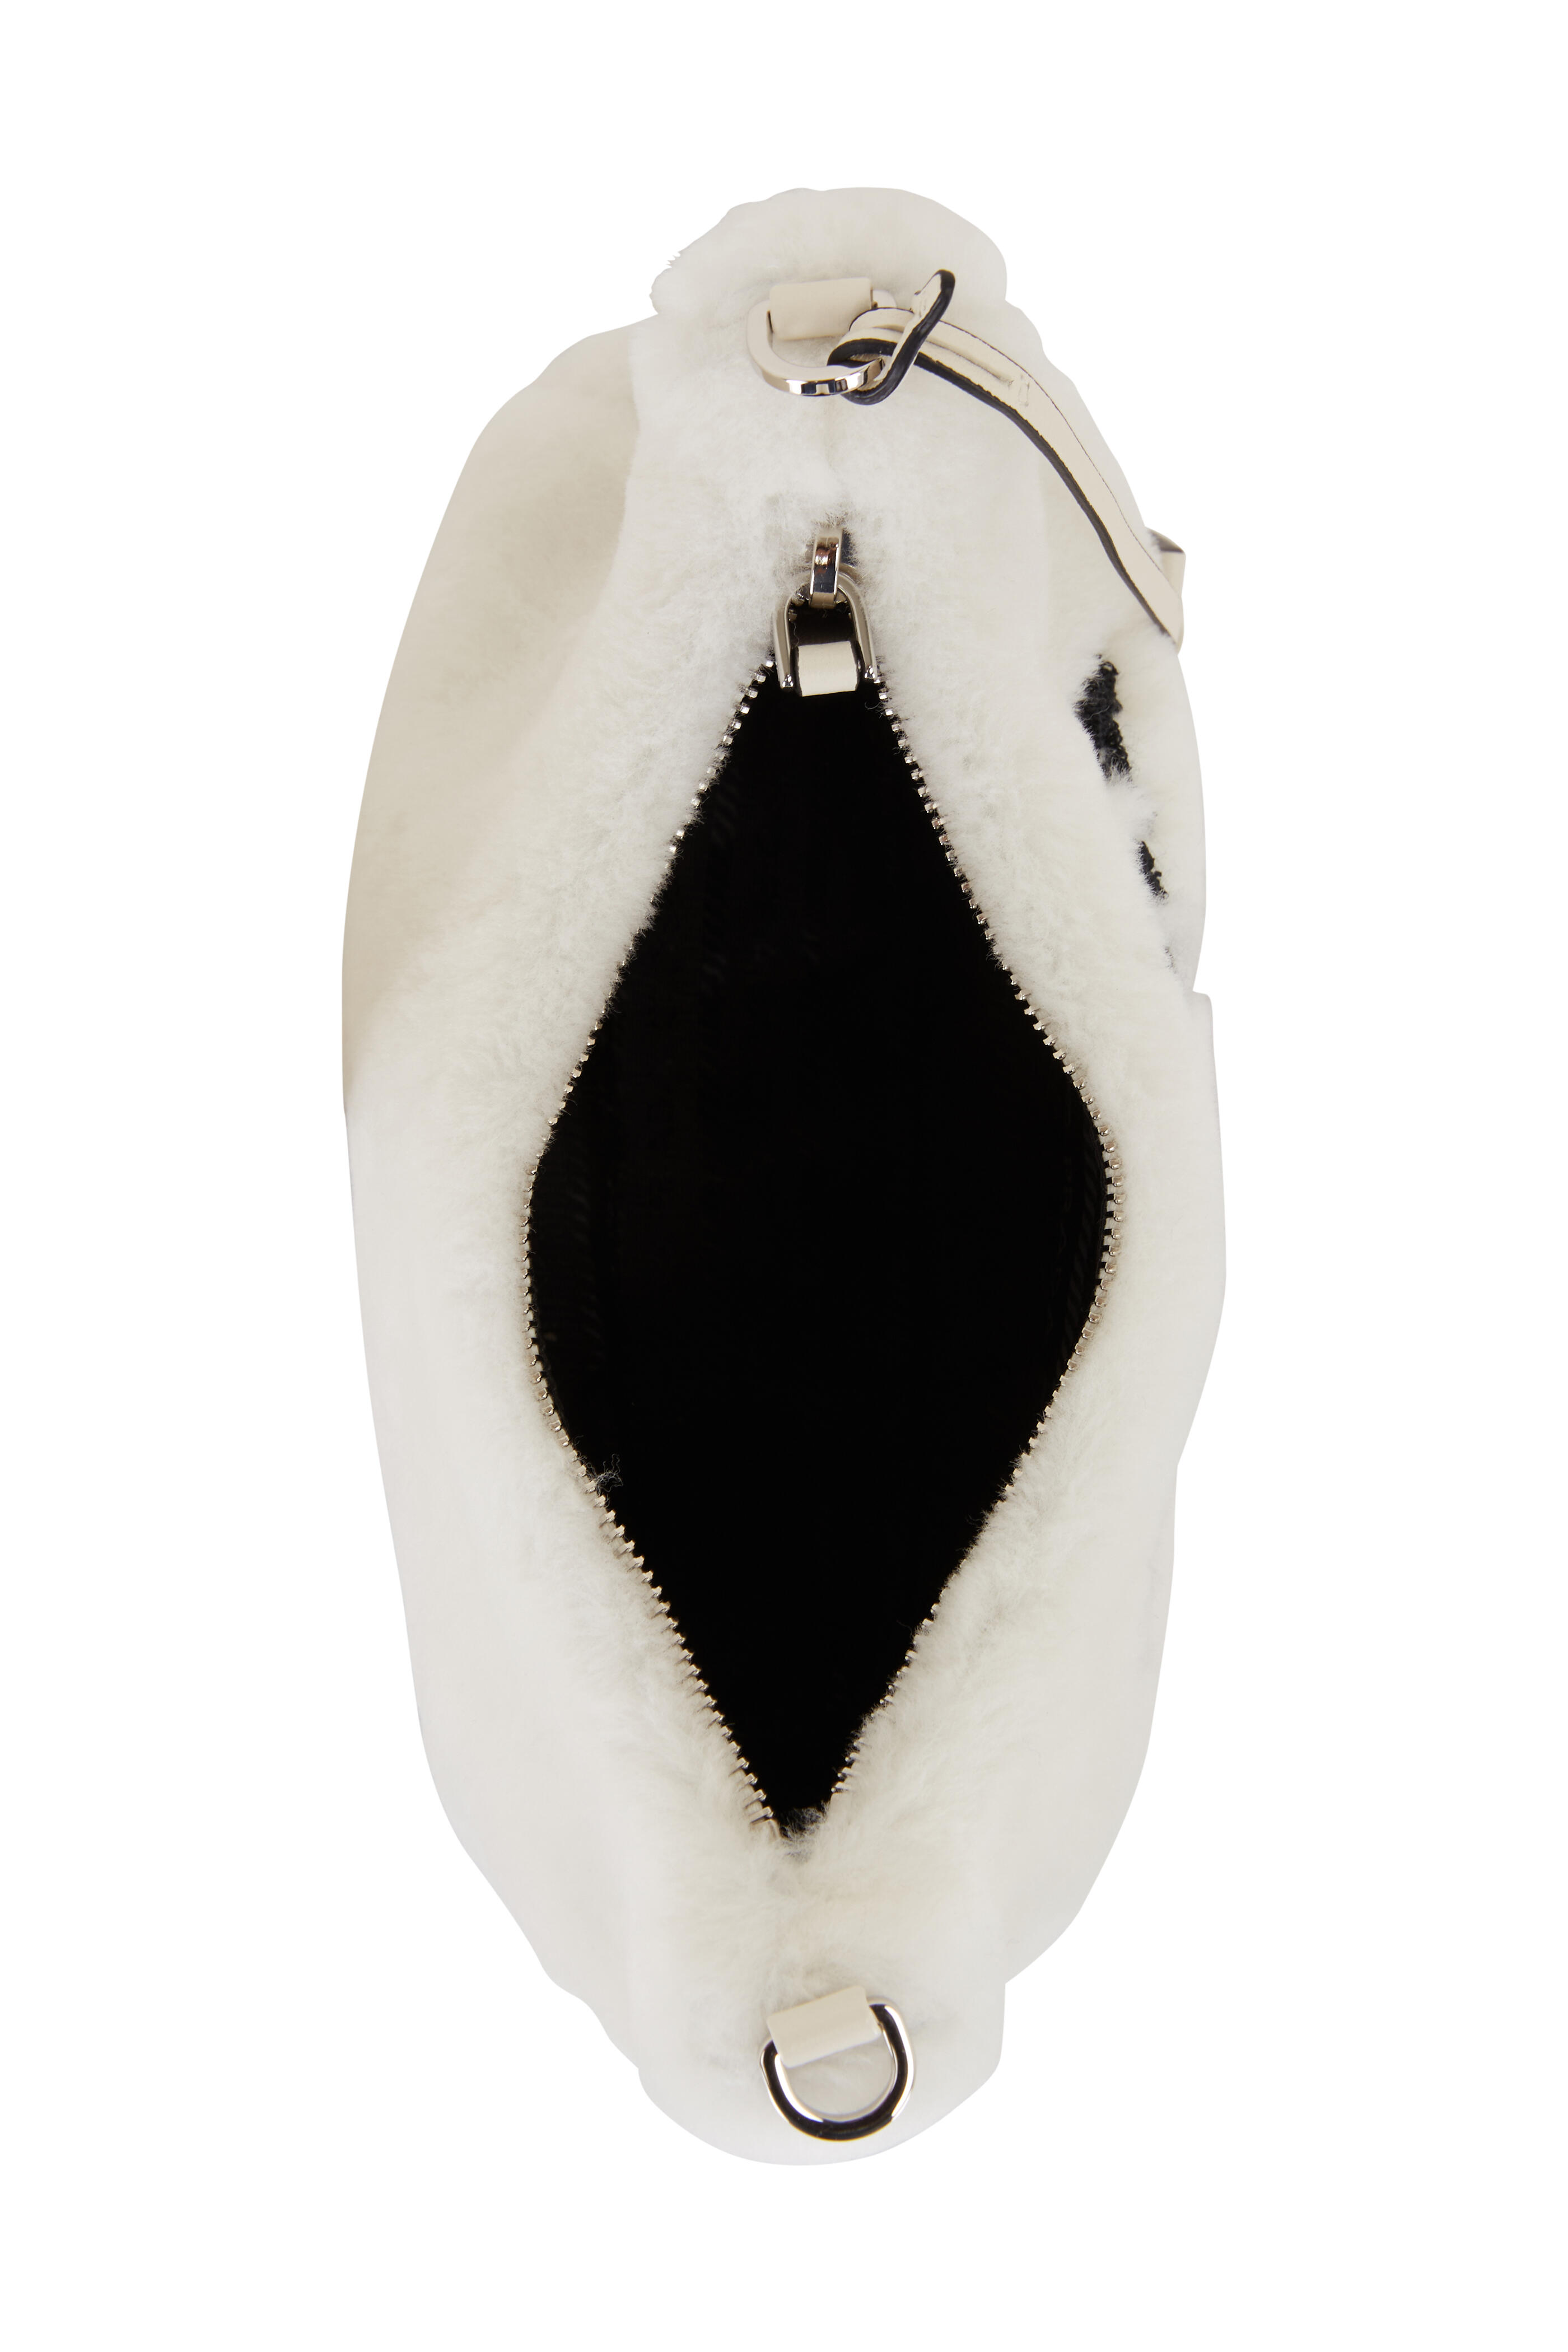 Prada Women's White Logo Shearling Shoulder Bag | by Mitchell Stores